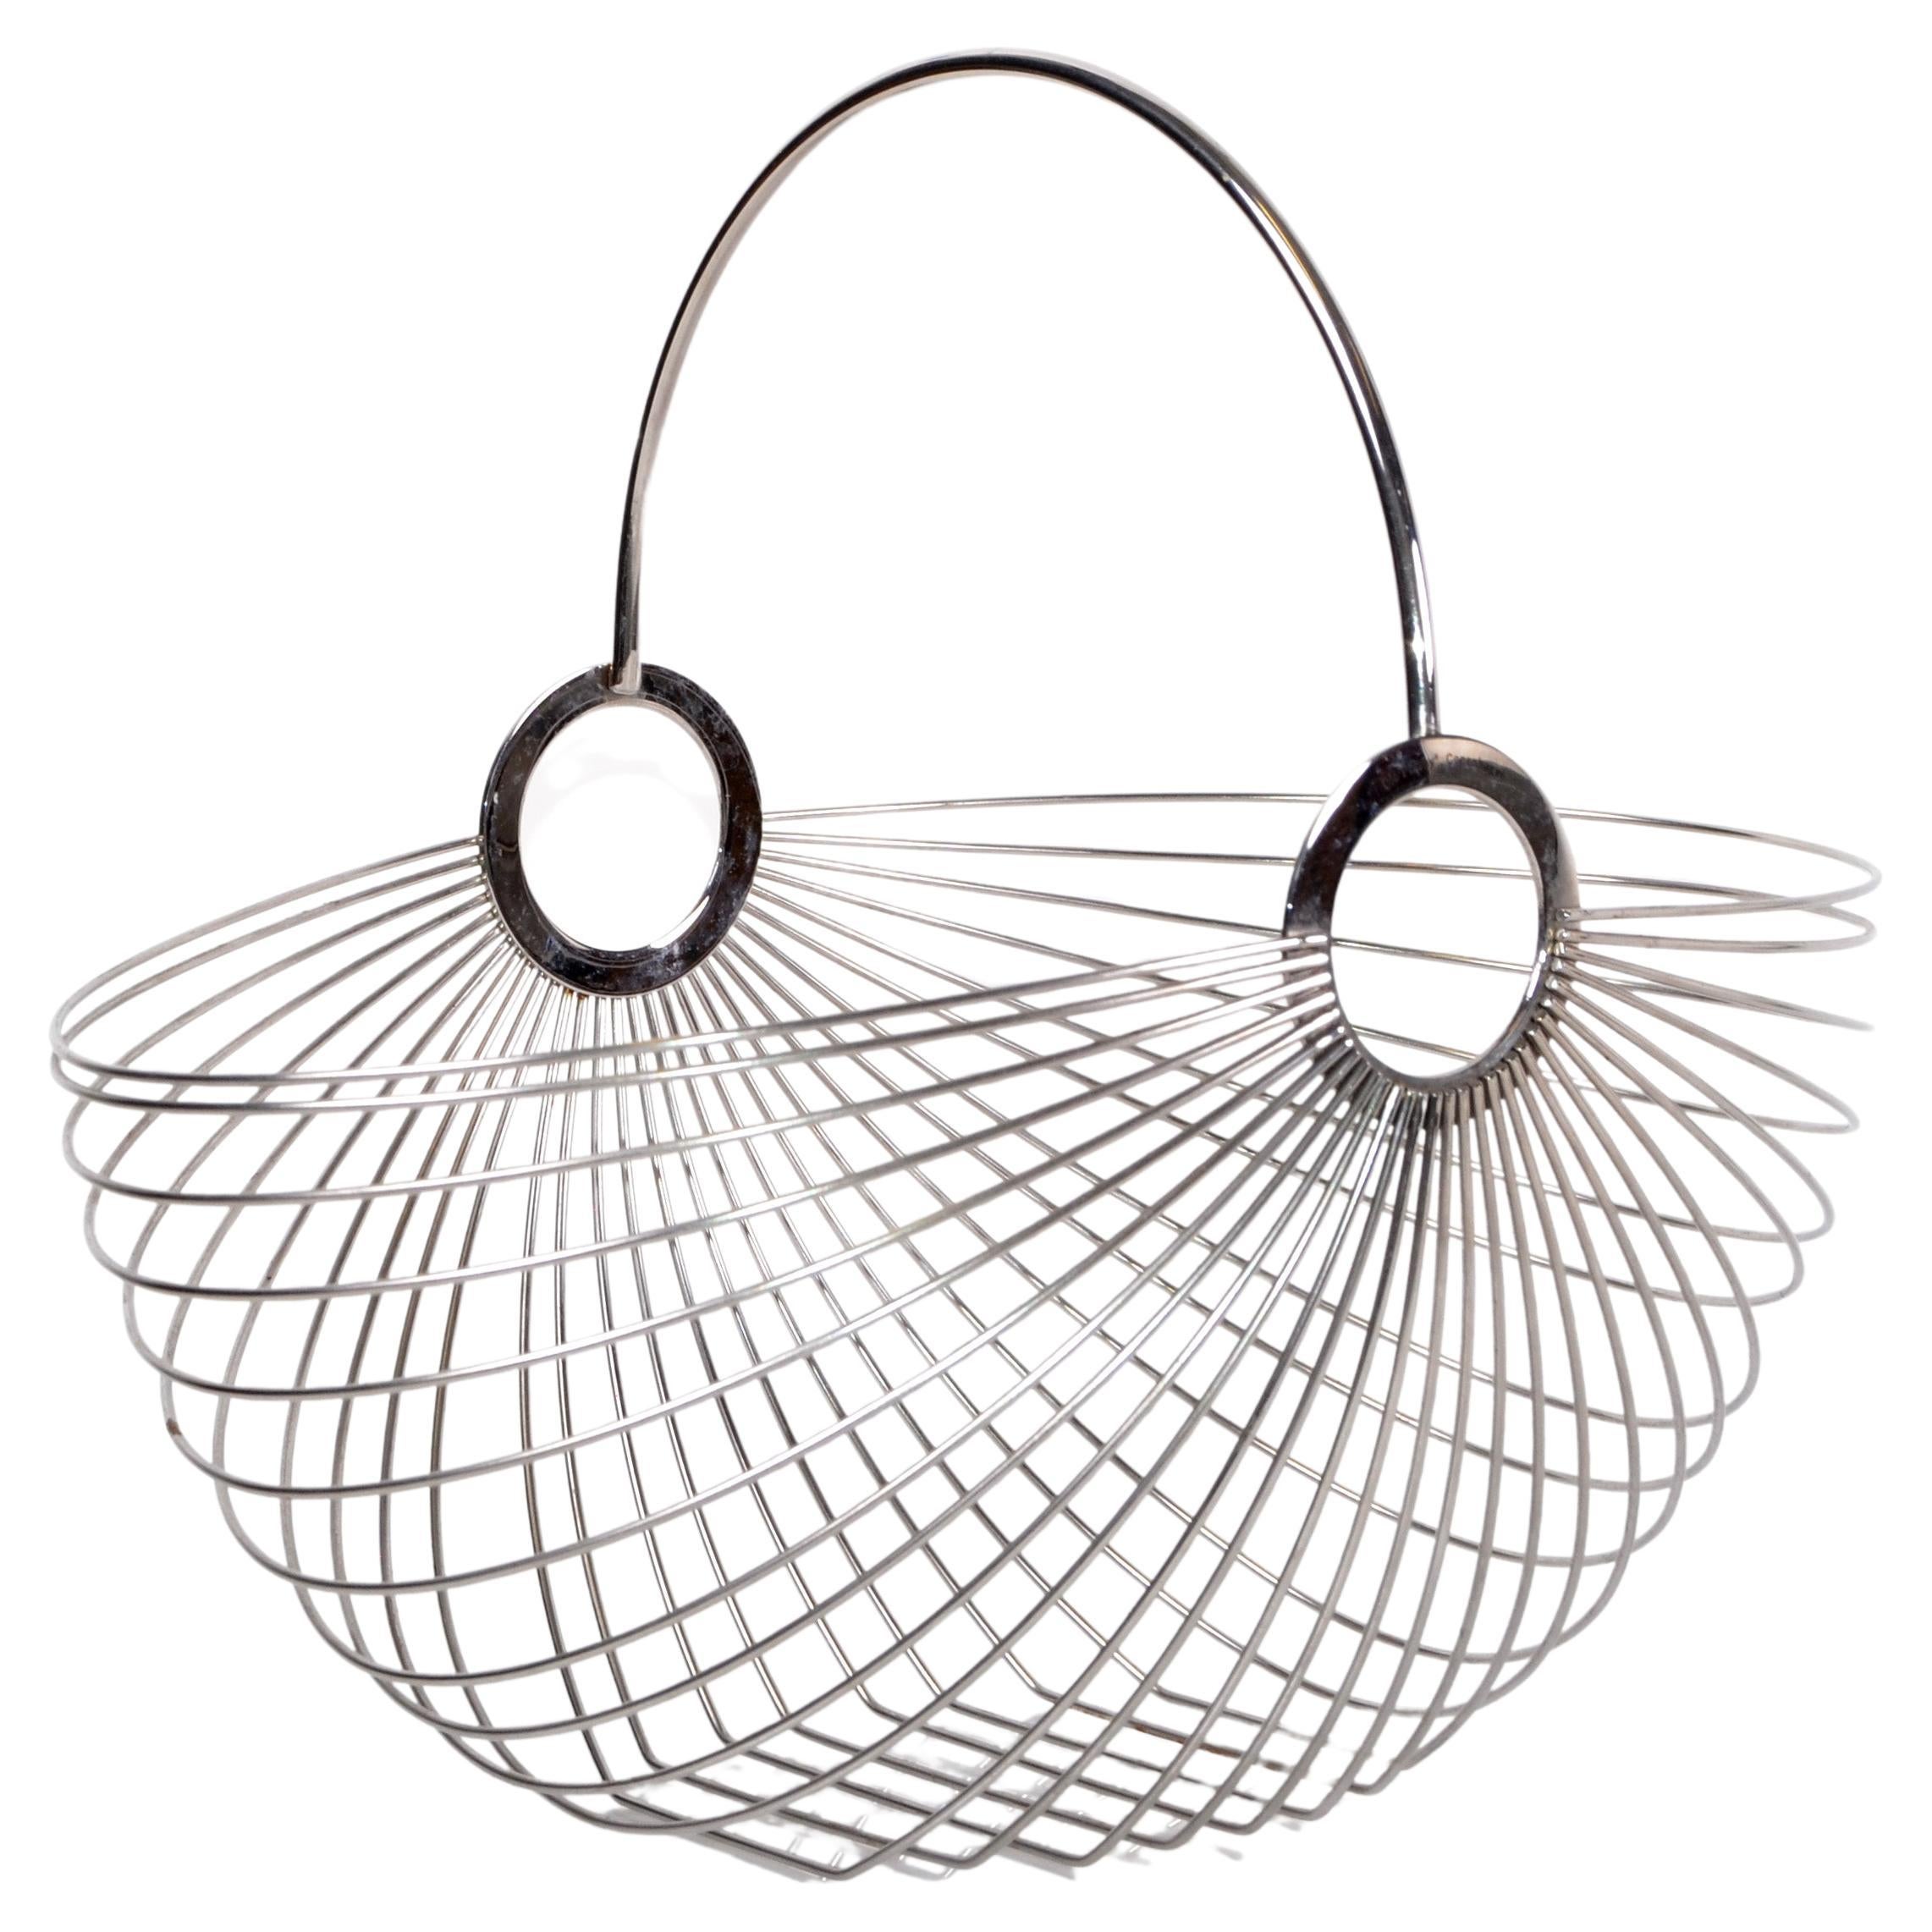 Ole Palsby Scandinavian Modern Decorative Stainless-Steel Basket Copenhagen For Sale